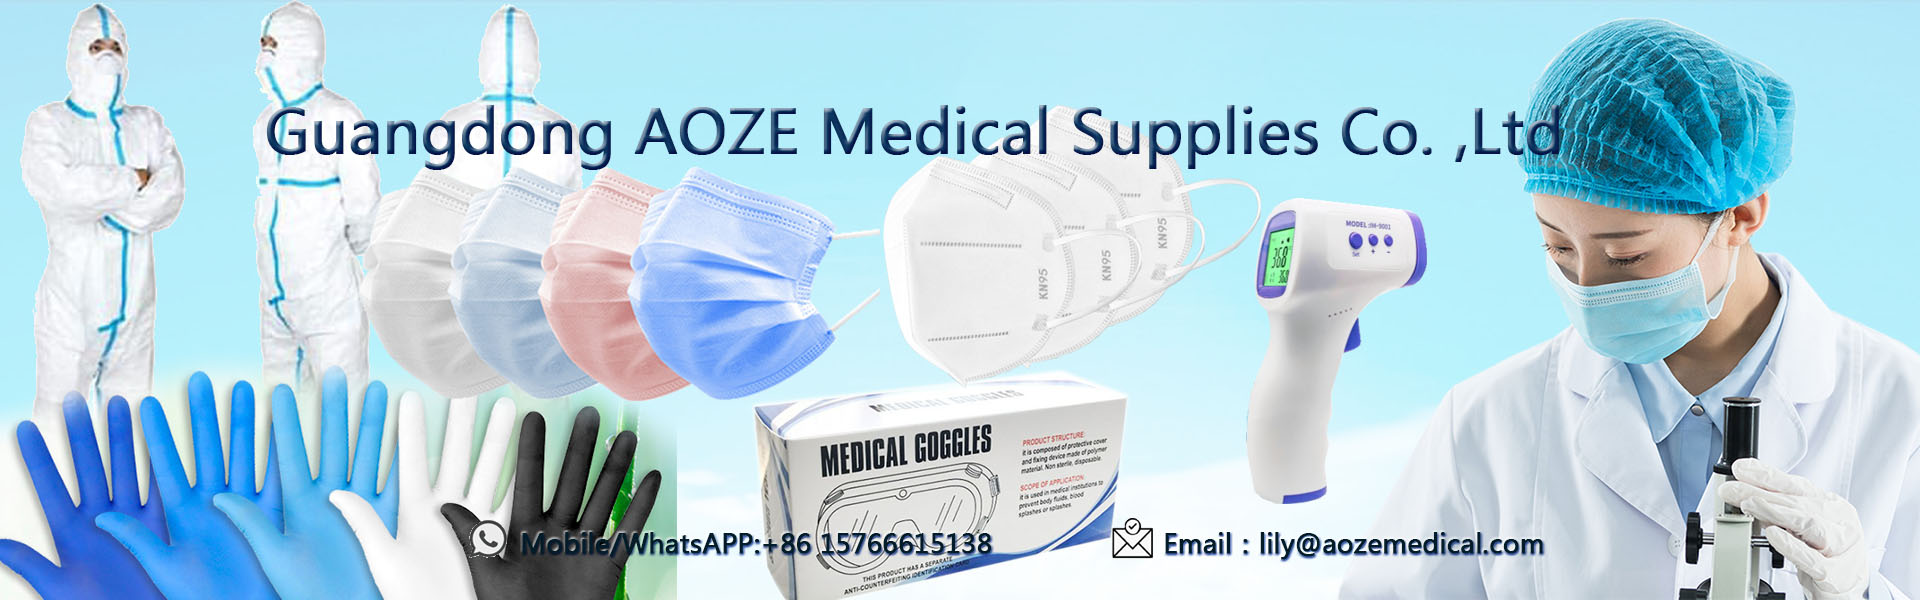 3ply使い捨てマスク、kn95フェイスマスク、外科用フェイスマスク,Guangdong AOZE Medical Supplies Co.,Ltd